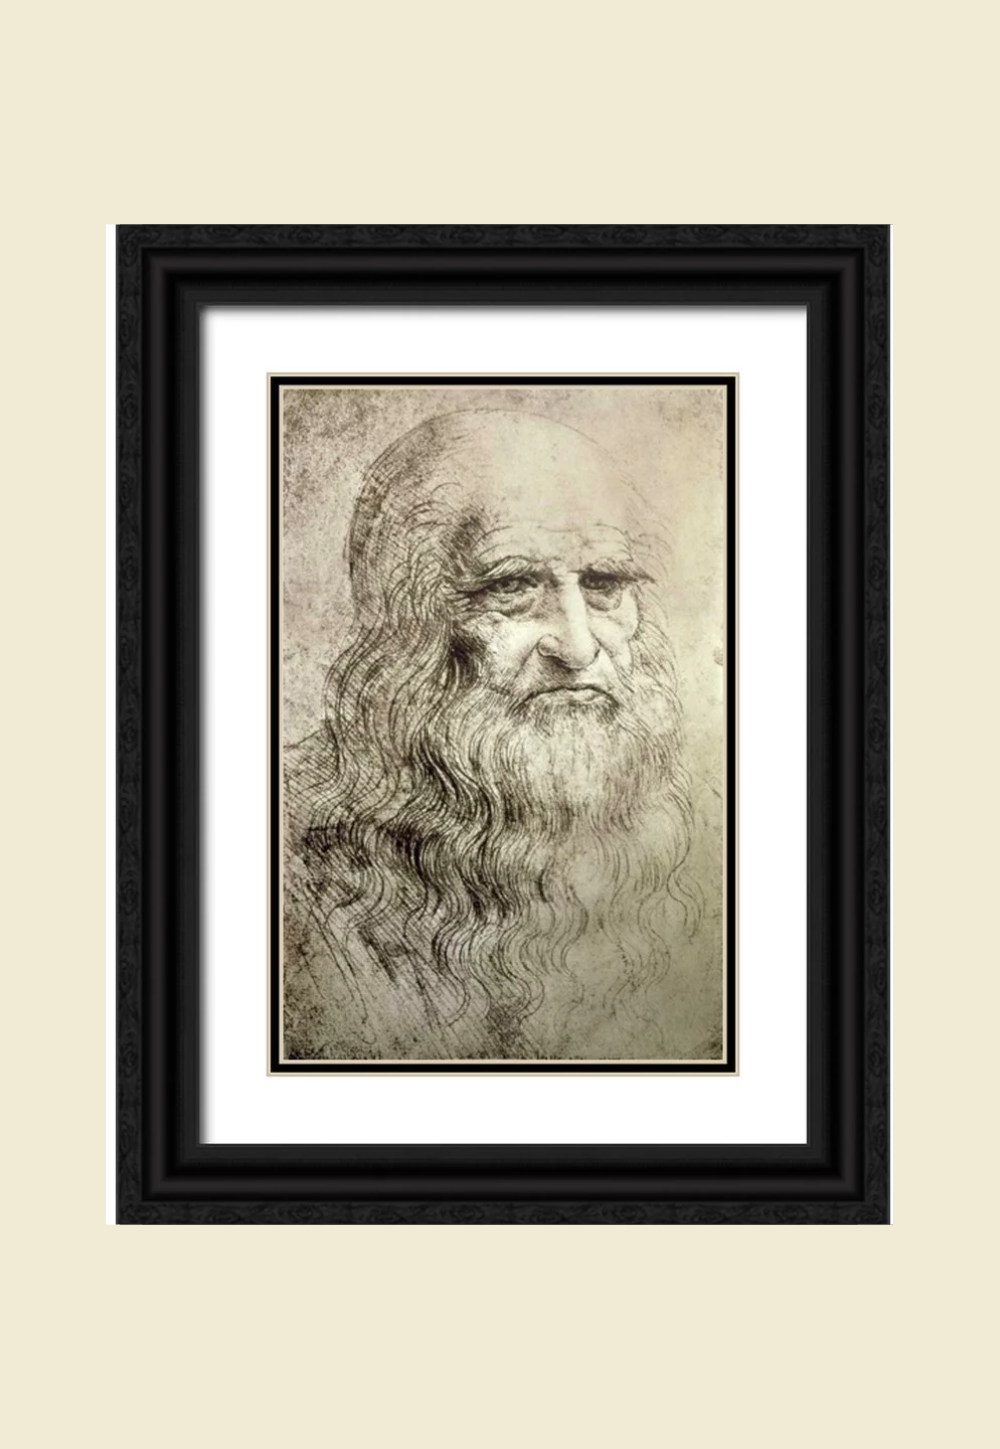 Leonardo Da Vinci's "Self-Portrait"